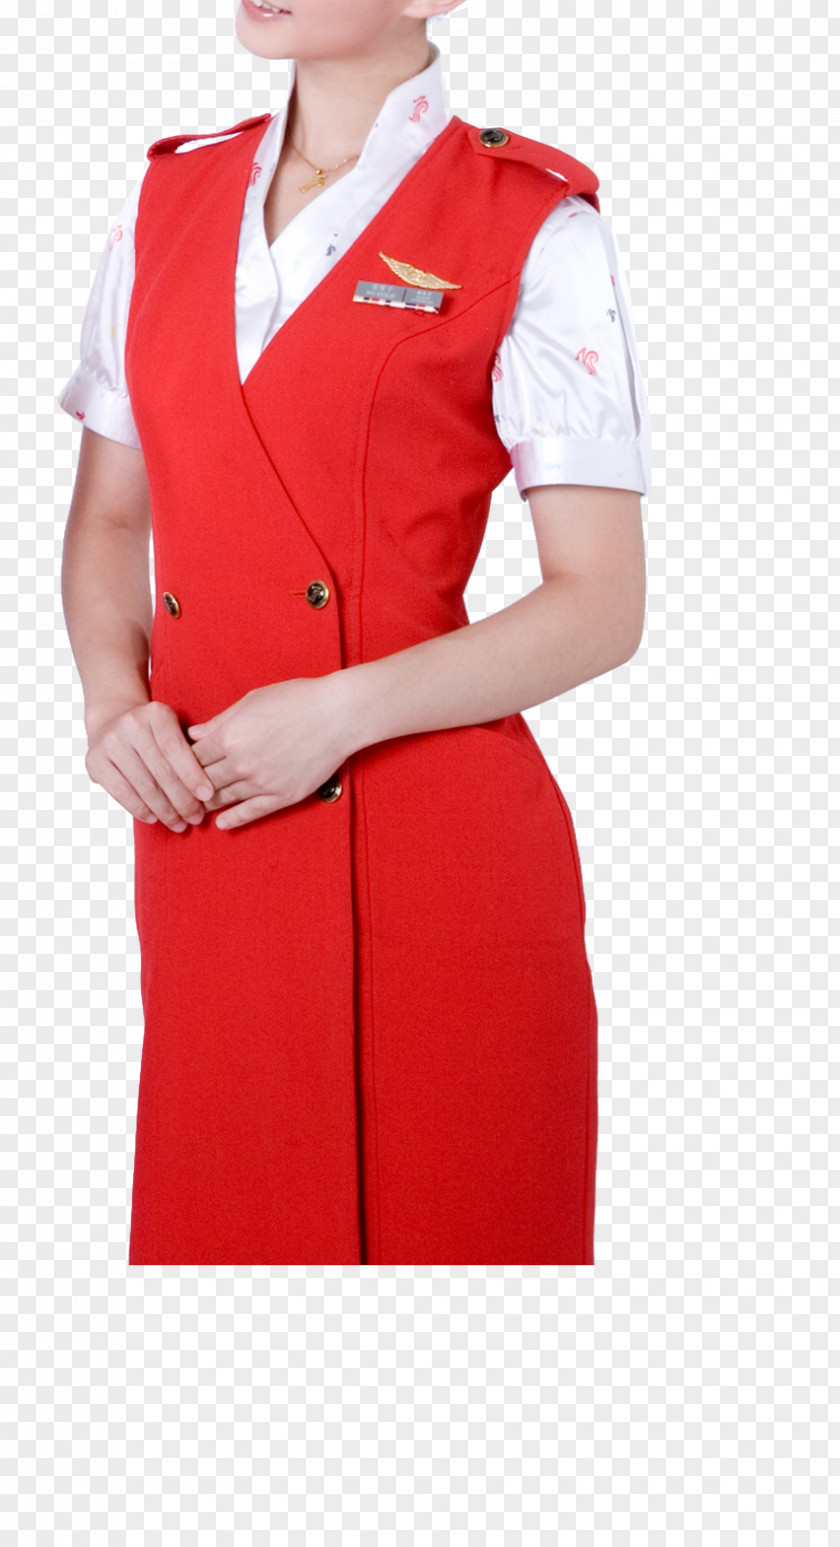 2017 Red Dress Hostesses Uniform Airline Aviation Organization PNG